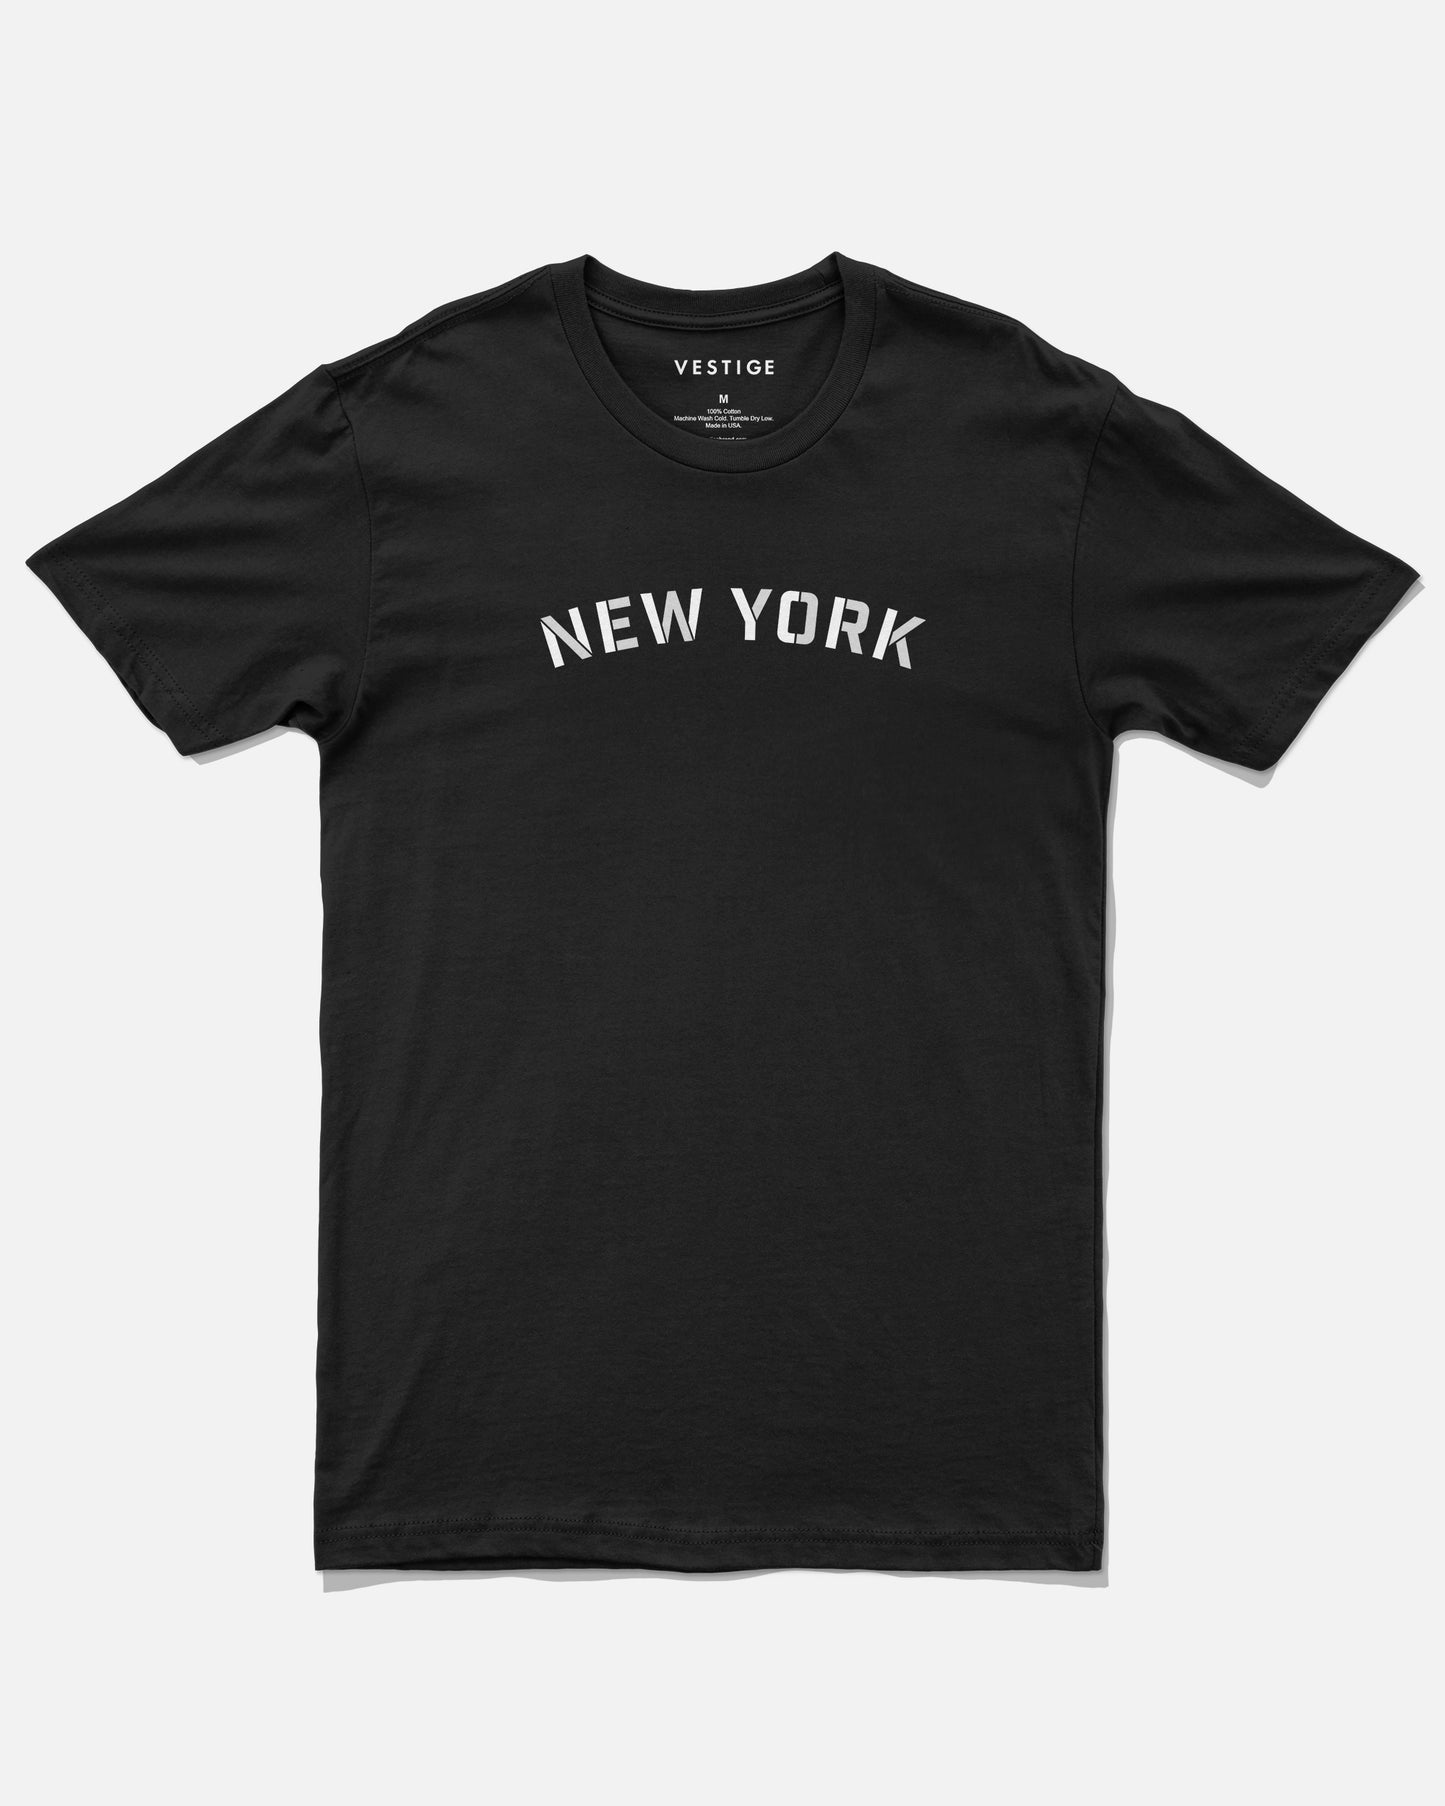 New York Industry Tee, Black-VESTIGE